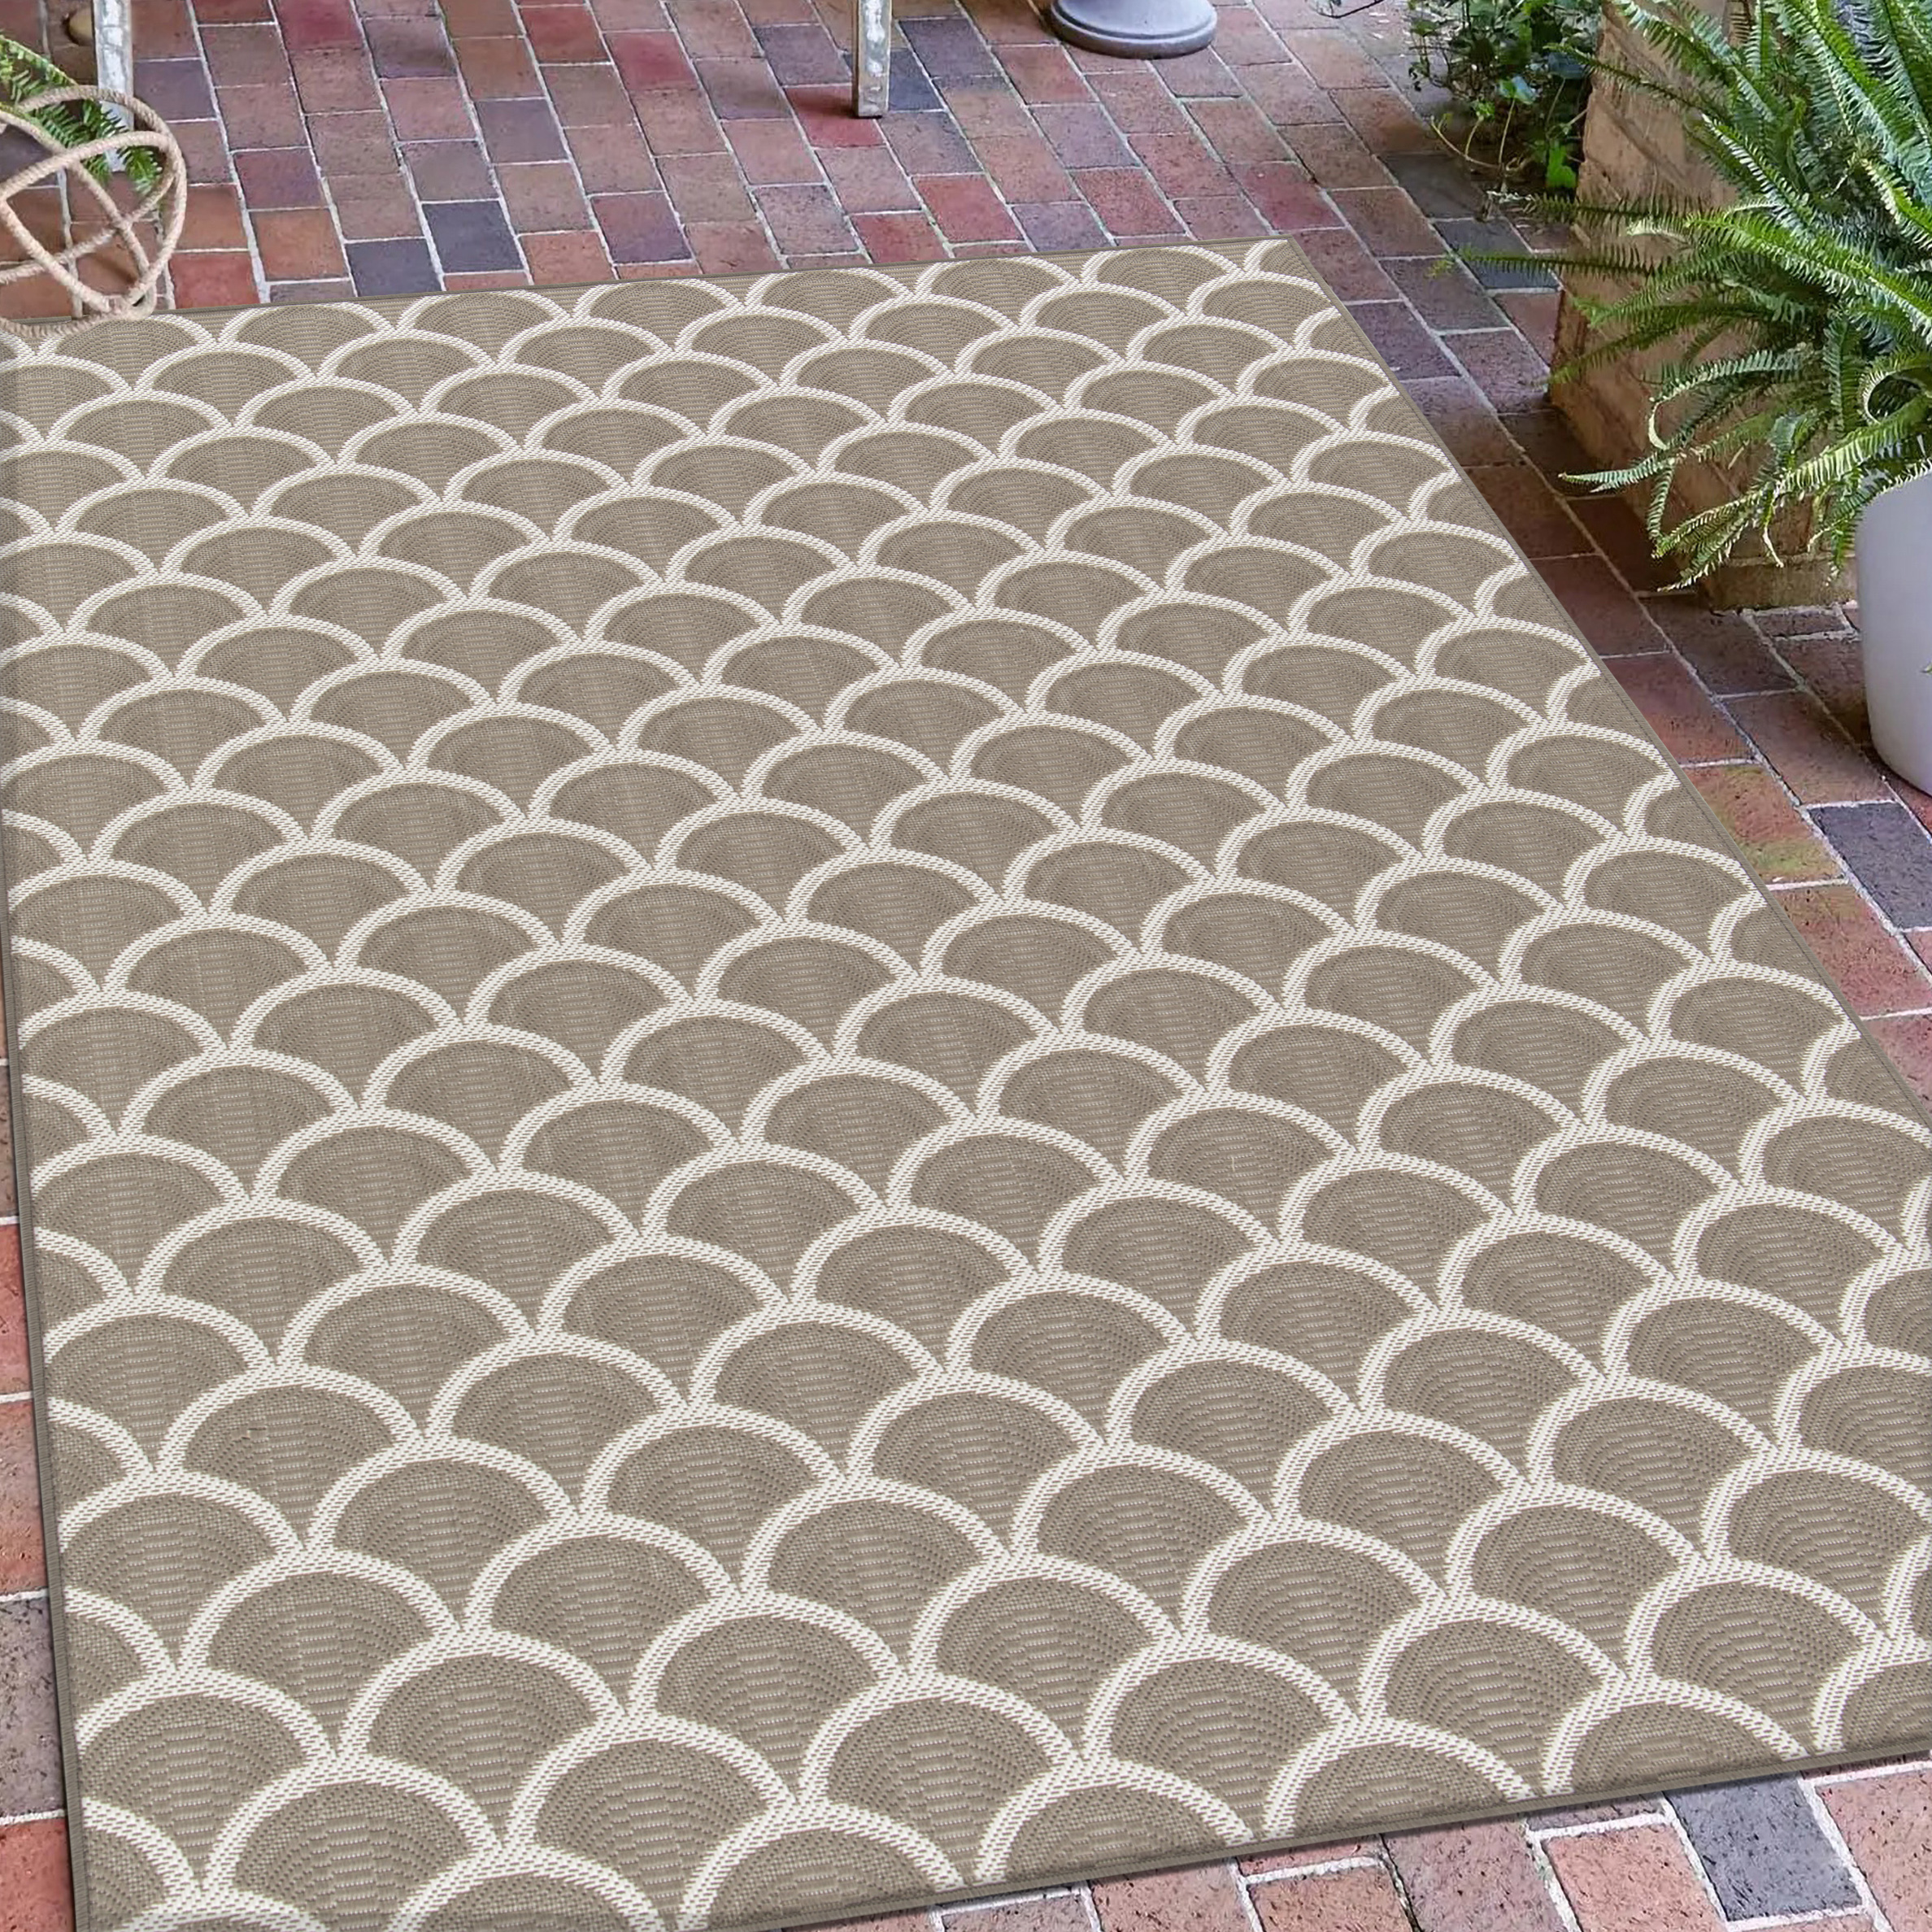 Outdoor area carpet textile texture design.